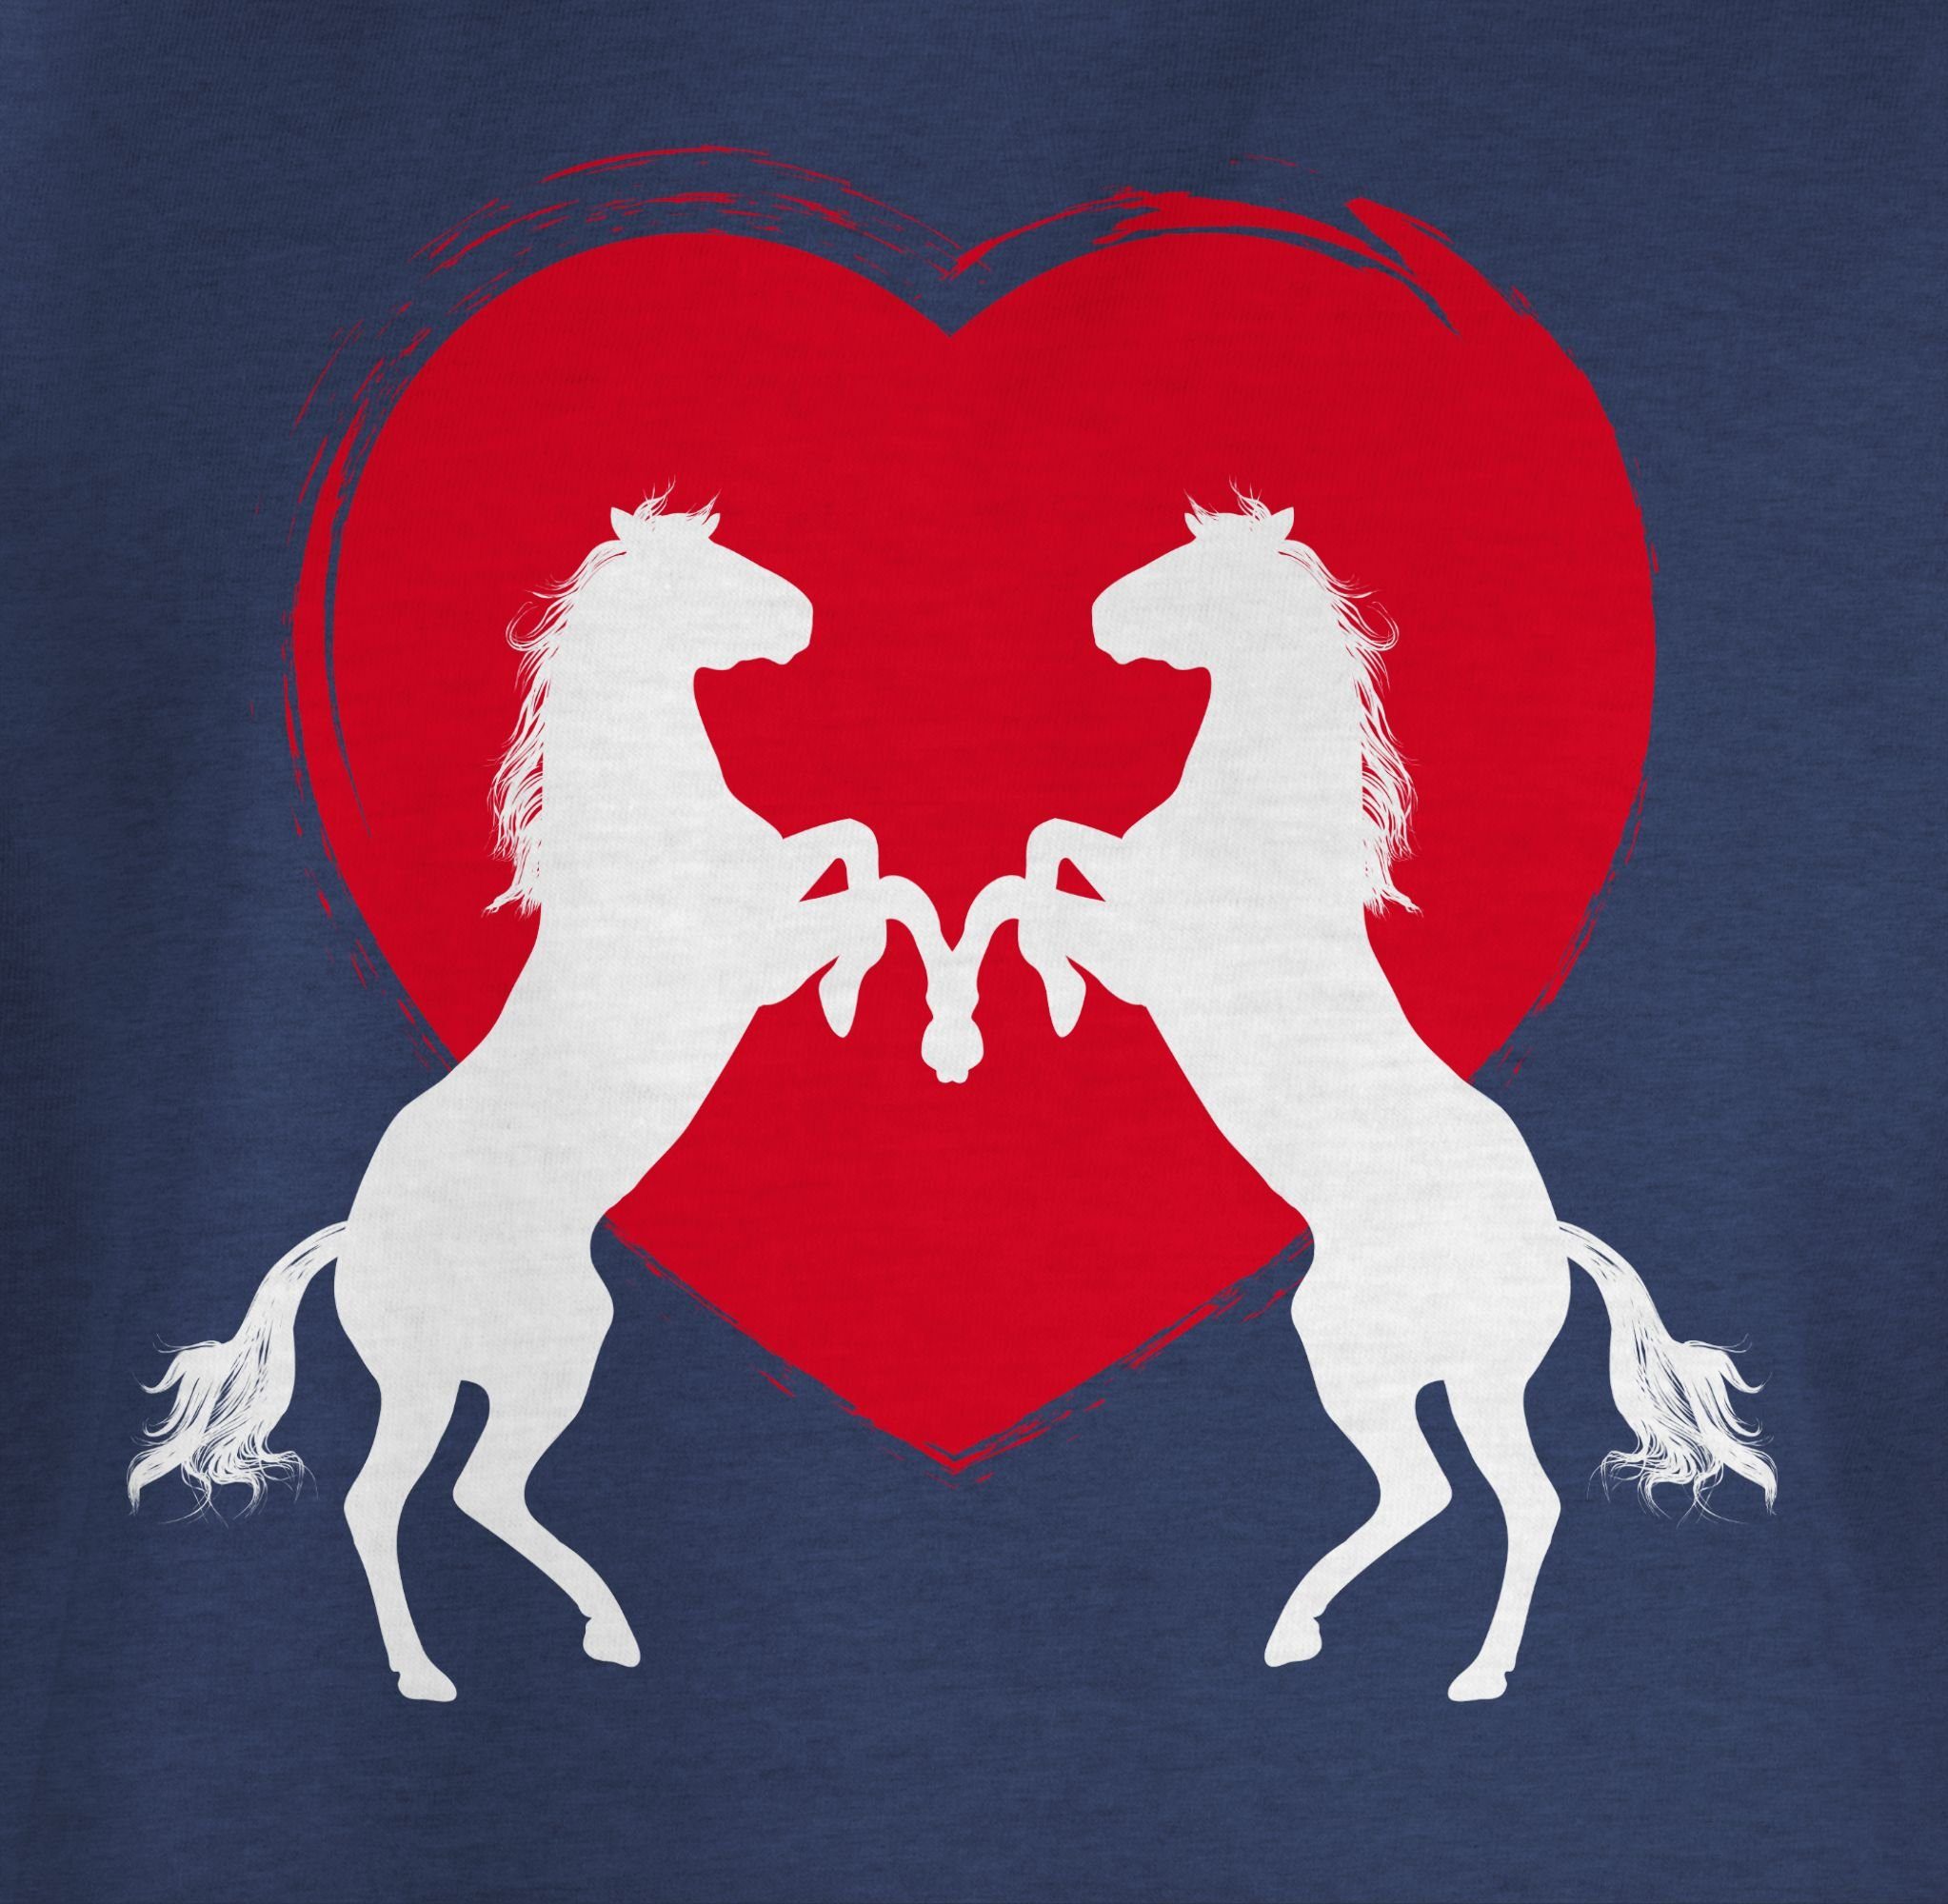 Pferde Meliert T-Shirt Shirtracer Pferd 2 Herz Dunkelblau mit